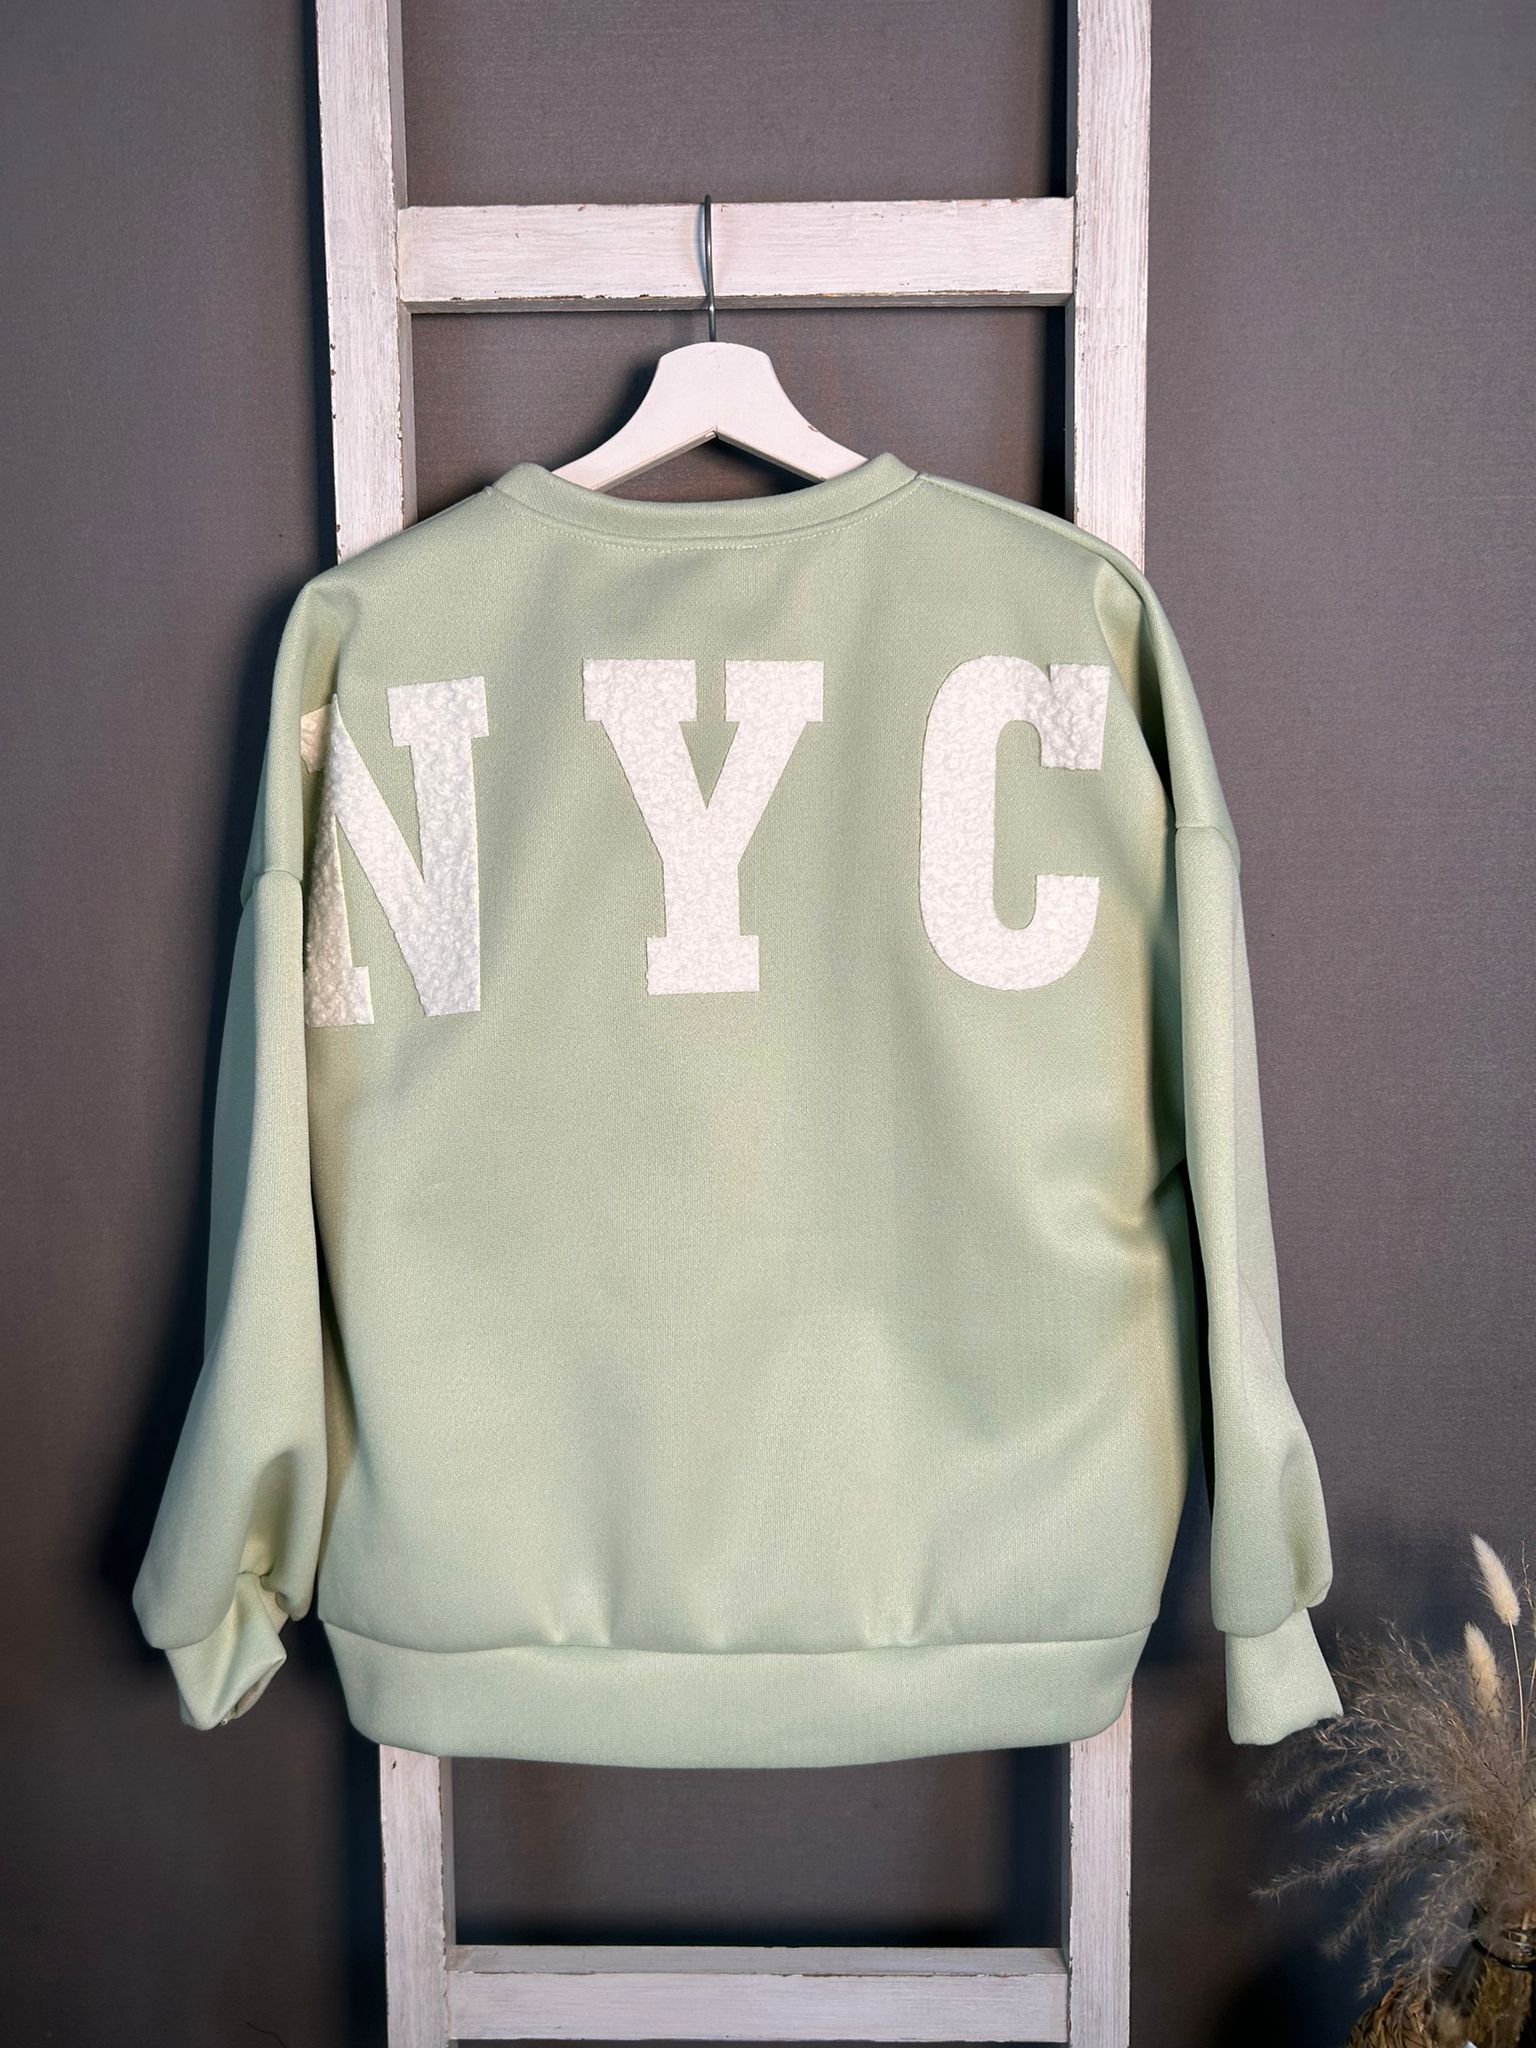 Sweater mit Rückenschriftzug “NYC”